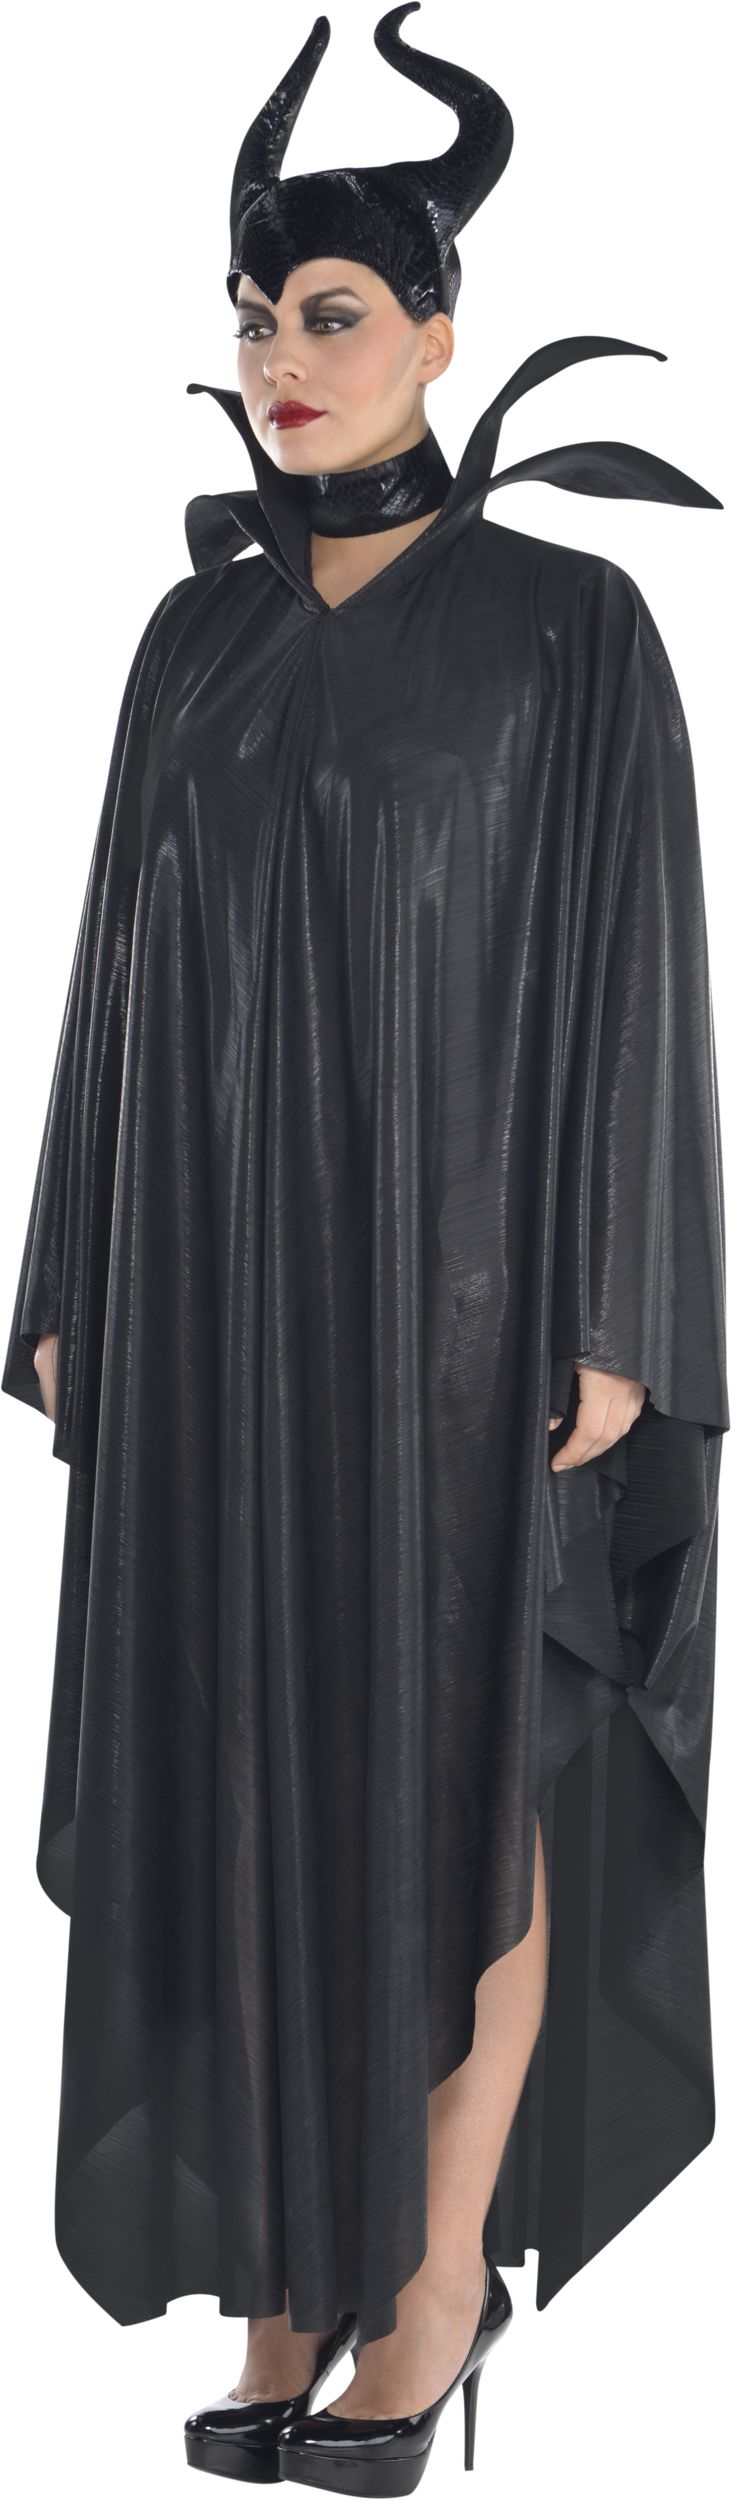 Ladies Cozy Villain Maleficent Costume